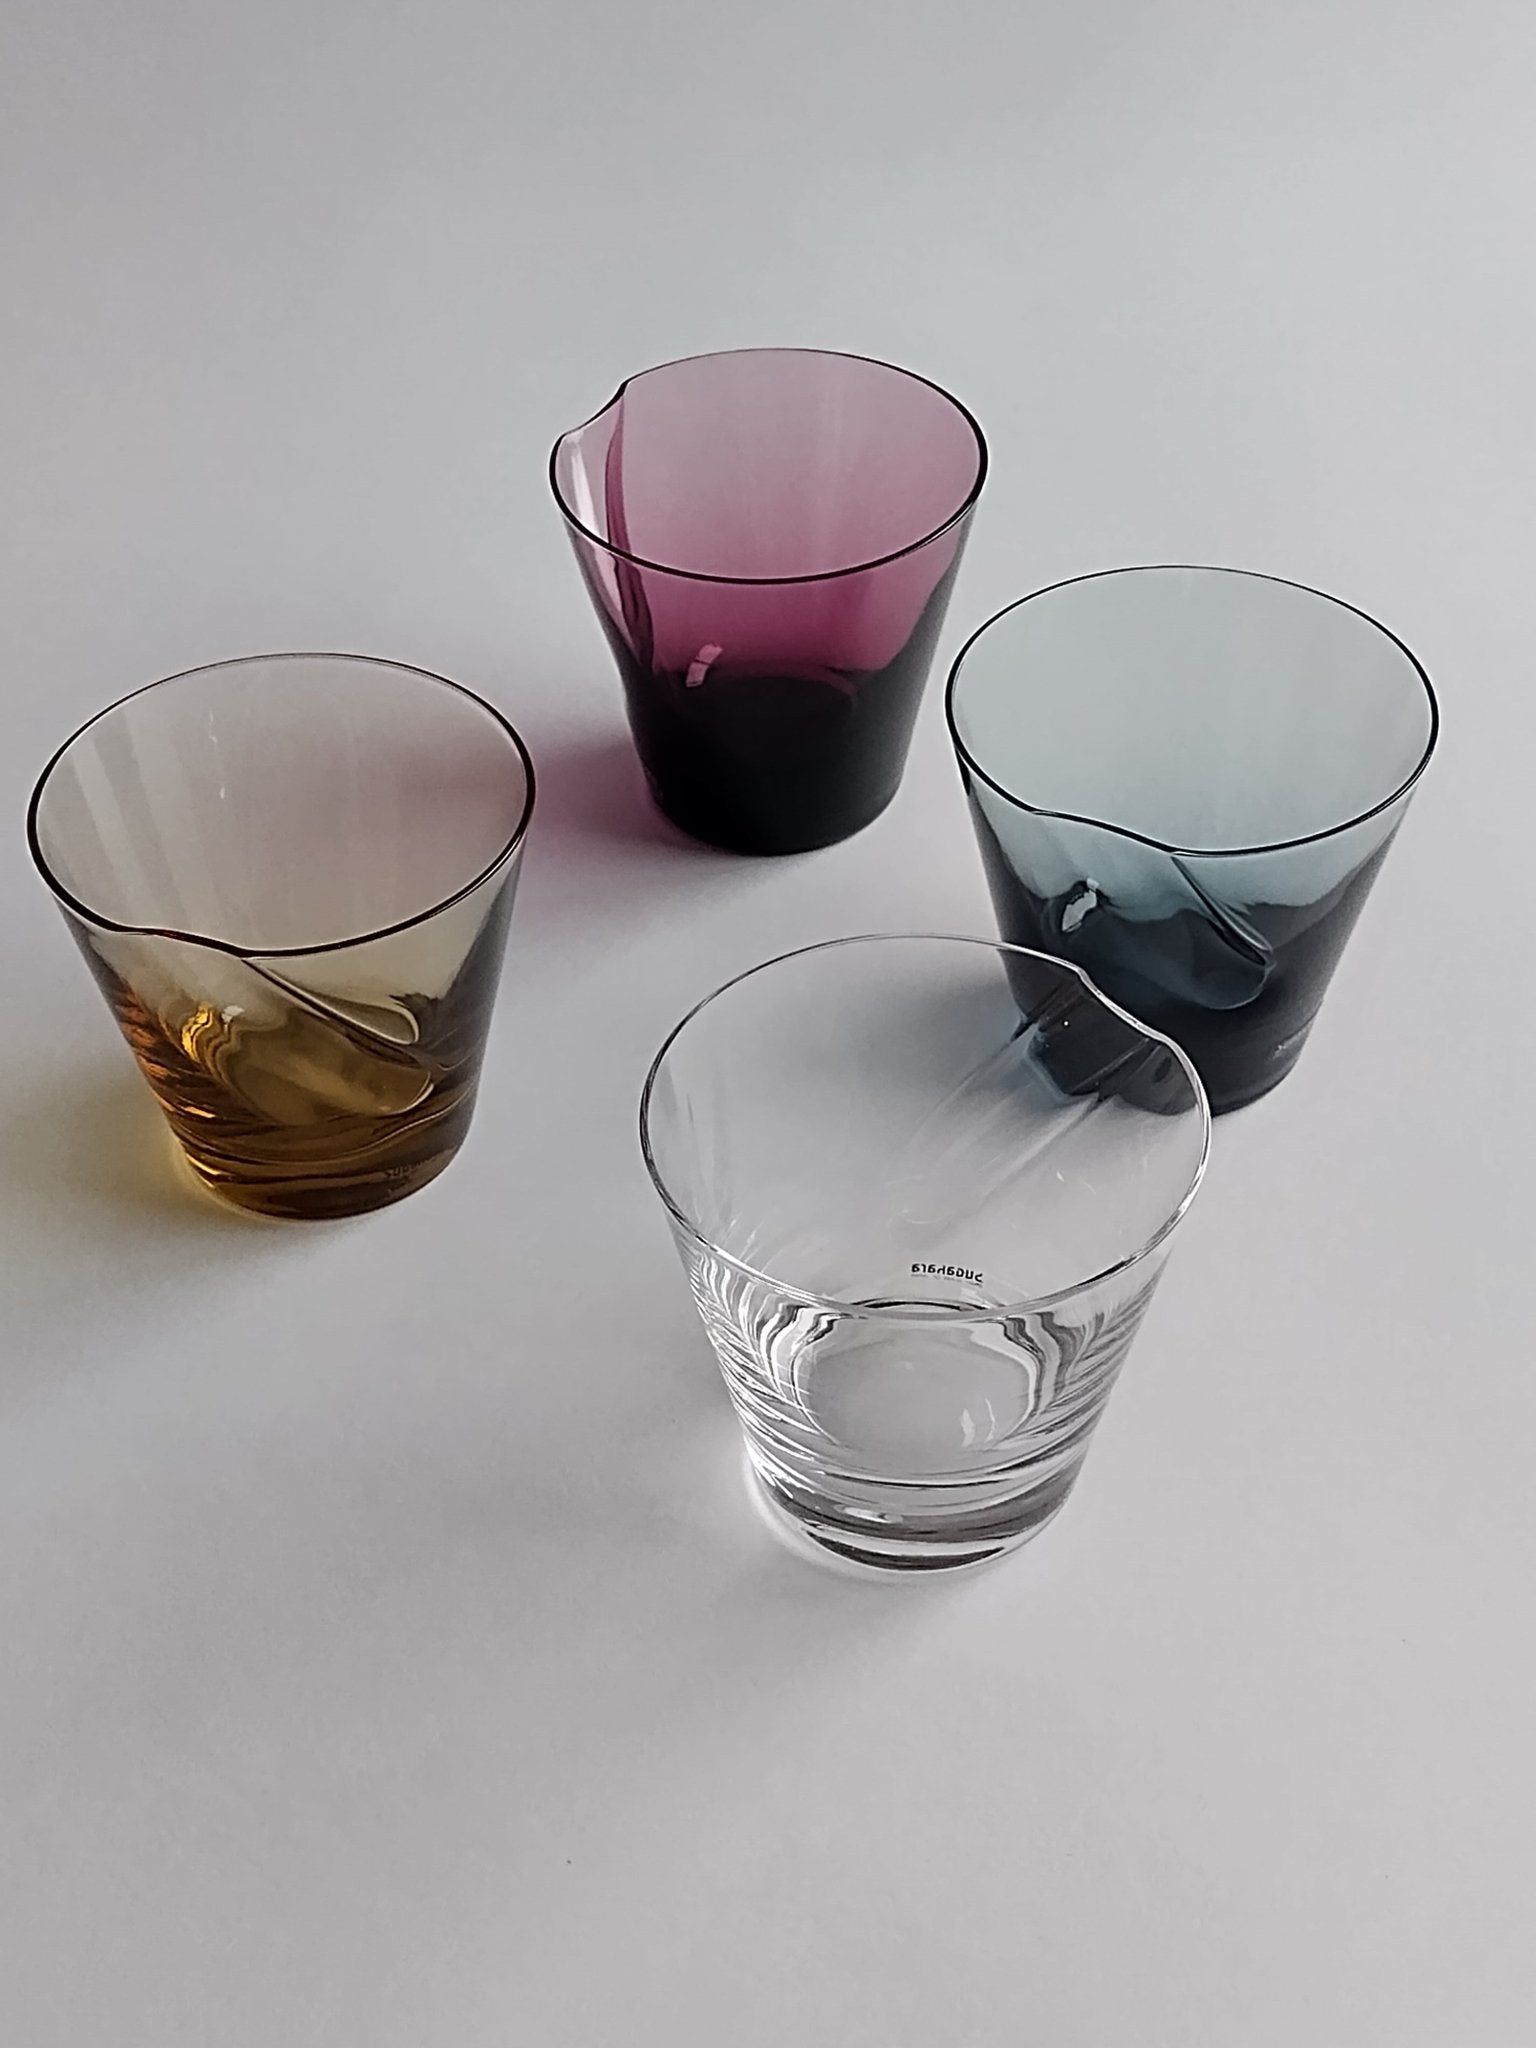 Sugahara-Peco universeel glas 250ml wine red - Schreuder-kraan.shop